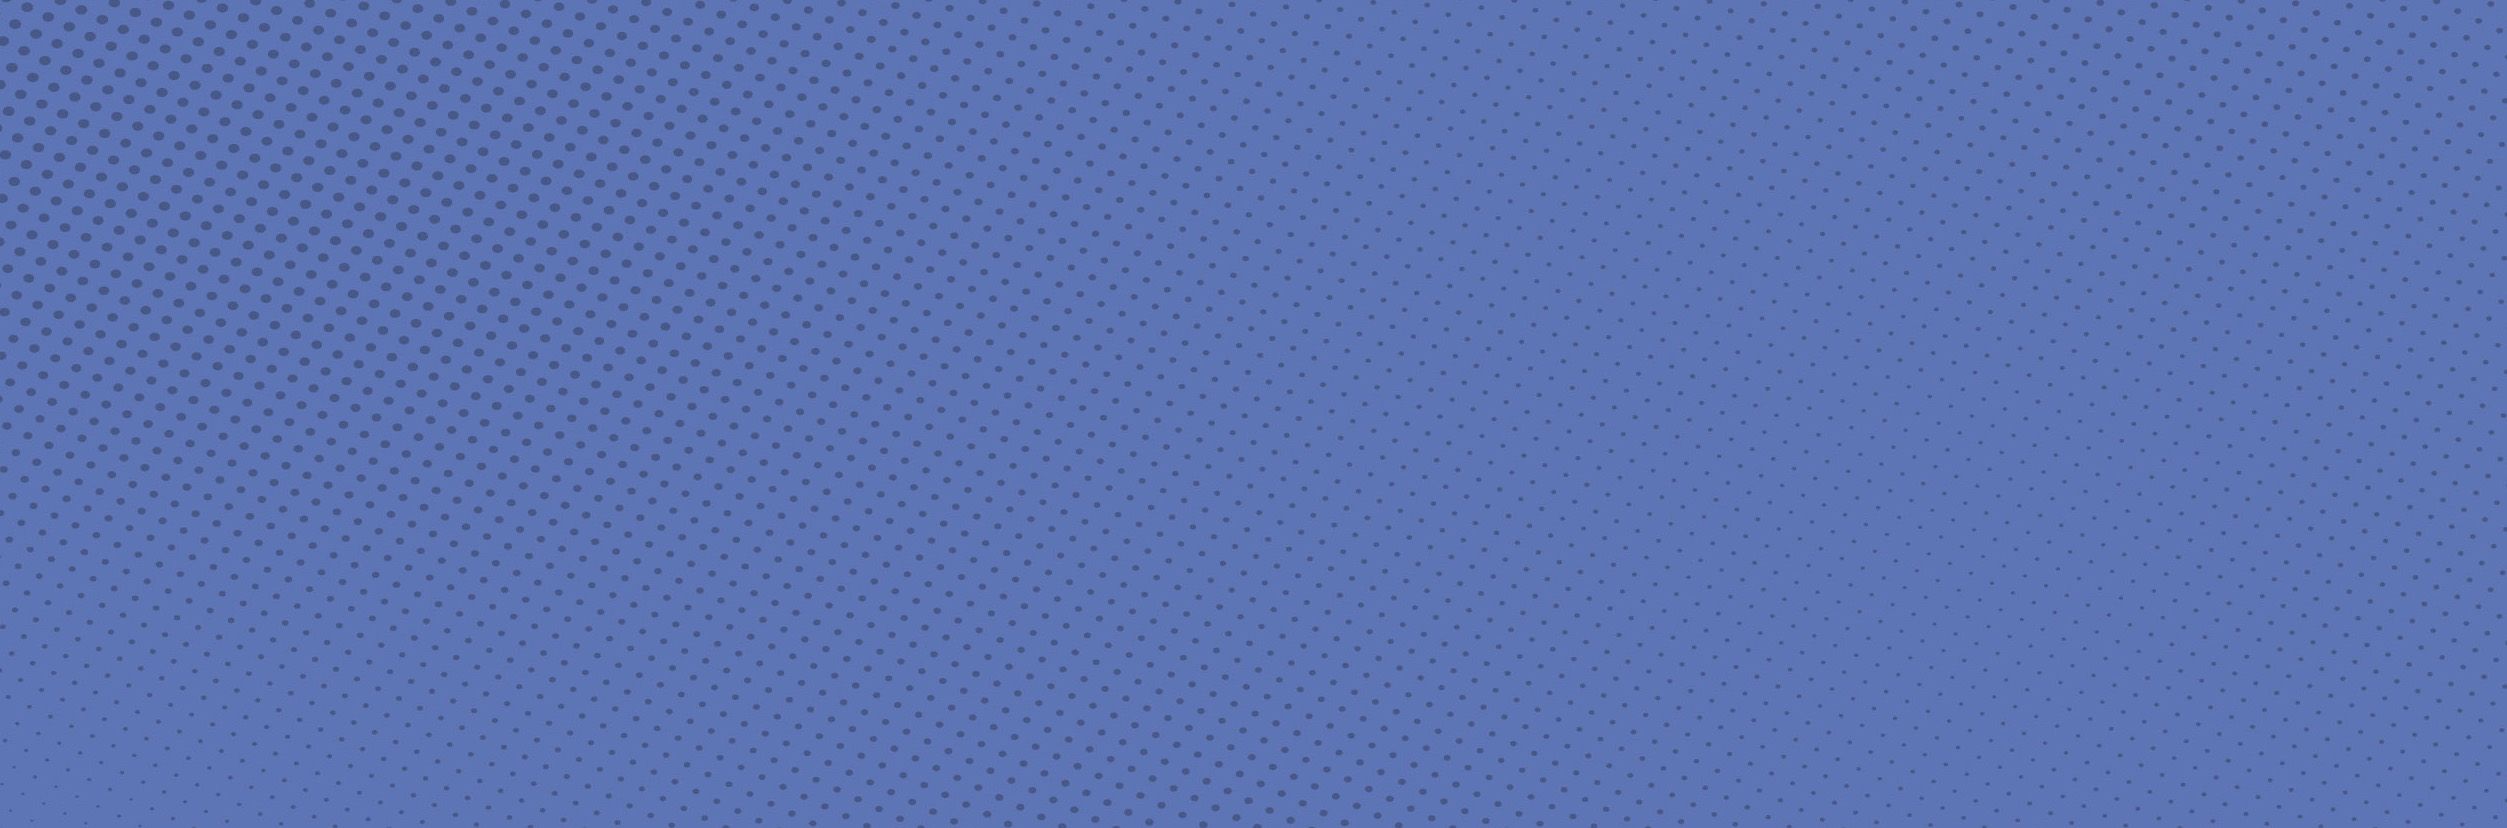 Blue background with darker blue spots 